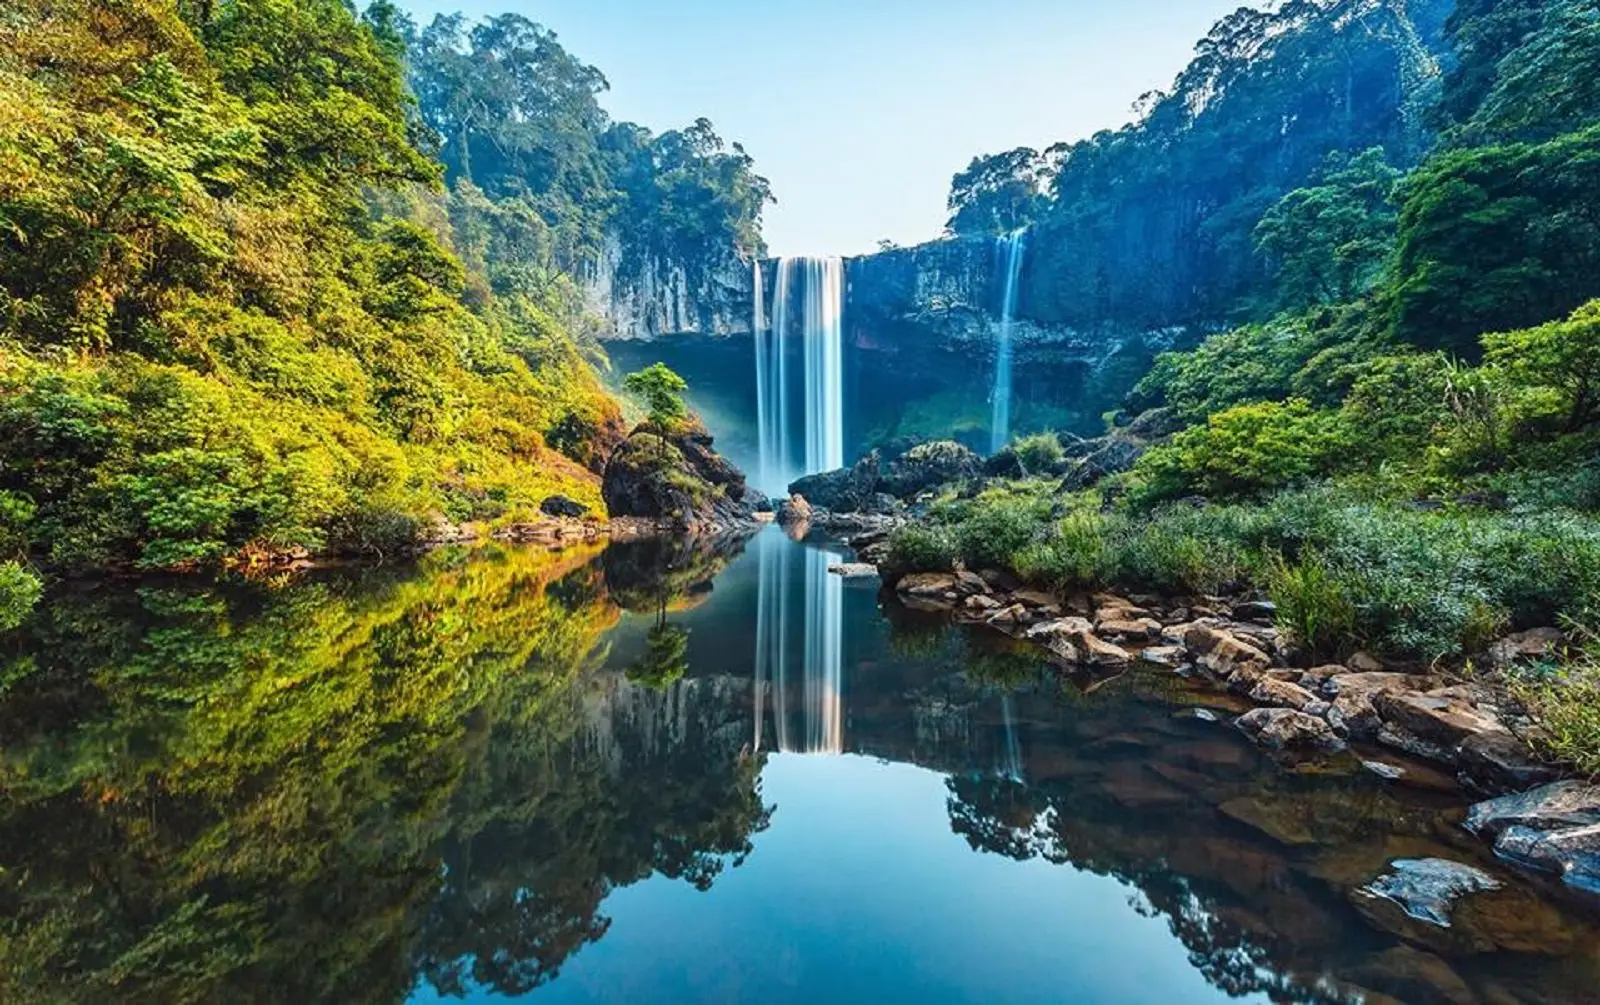 K50 Waterfall, also known as Hang En Waterfall, belongs to Kon Chu Rang Nature Reserve